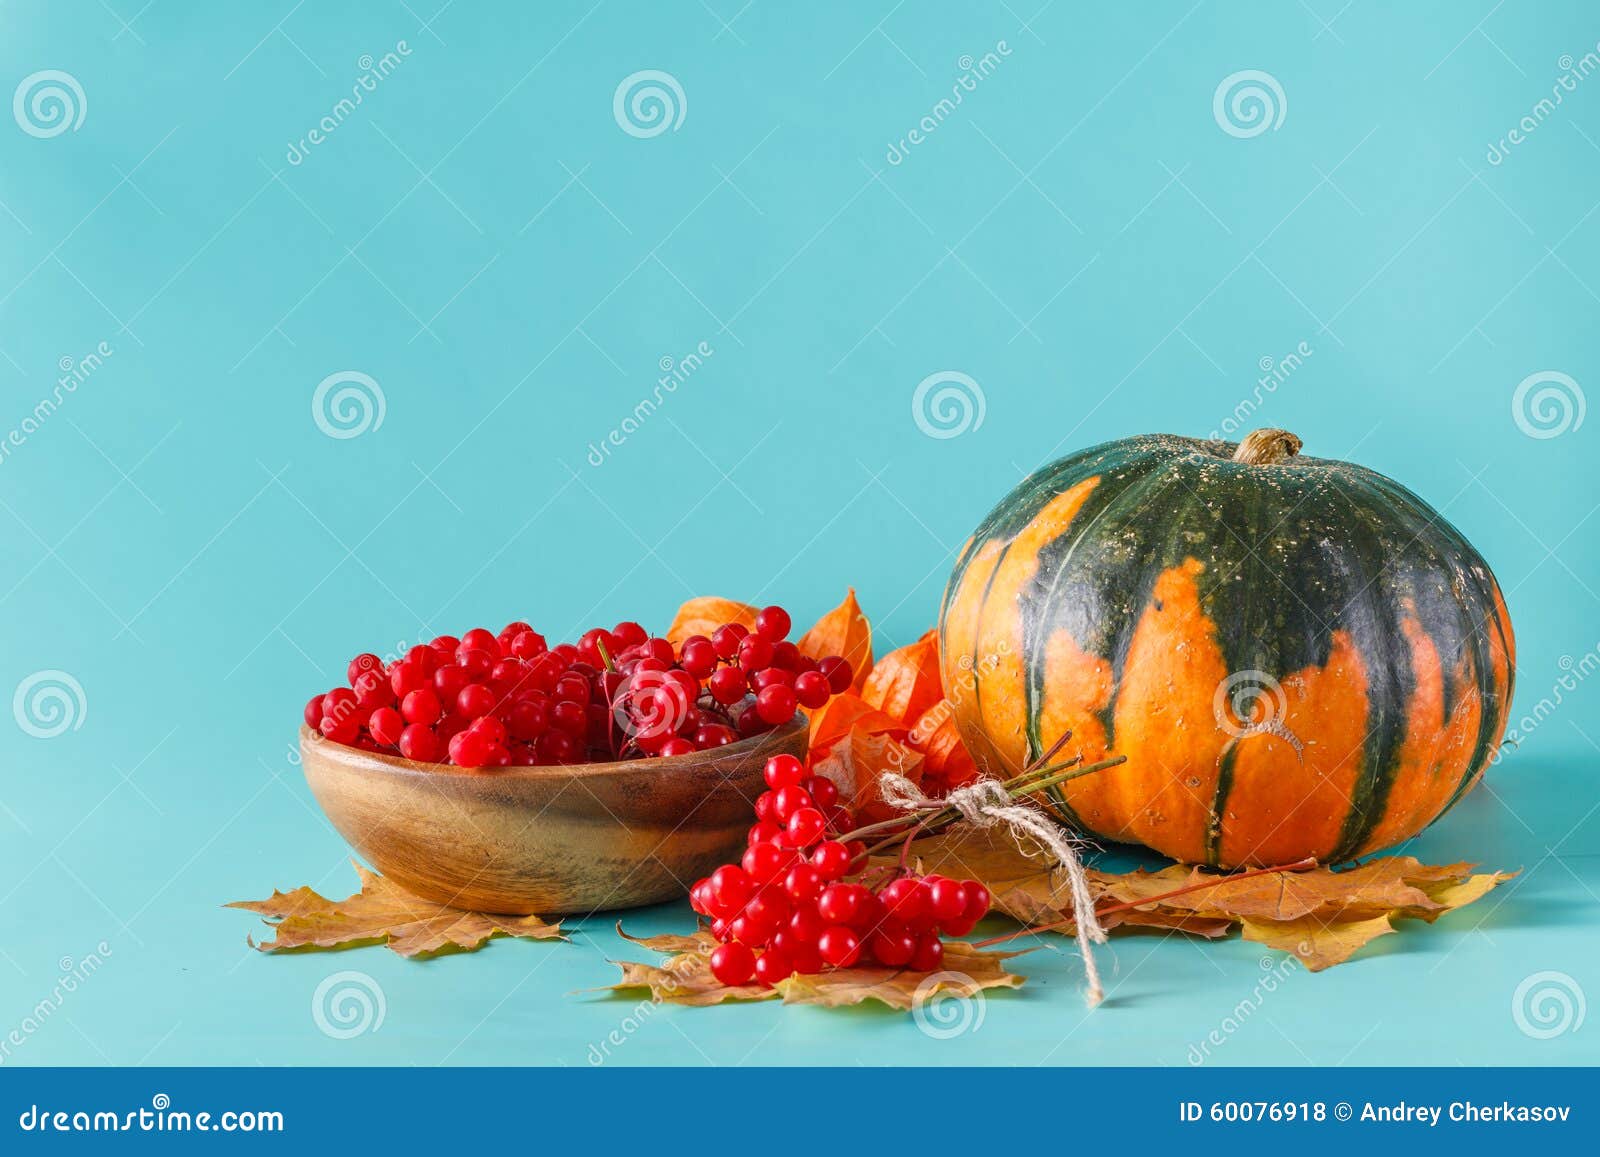 fall harvest on aquamarine shadowless background